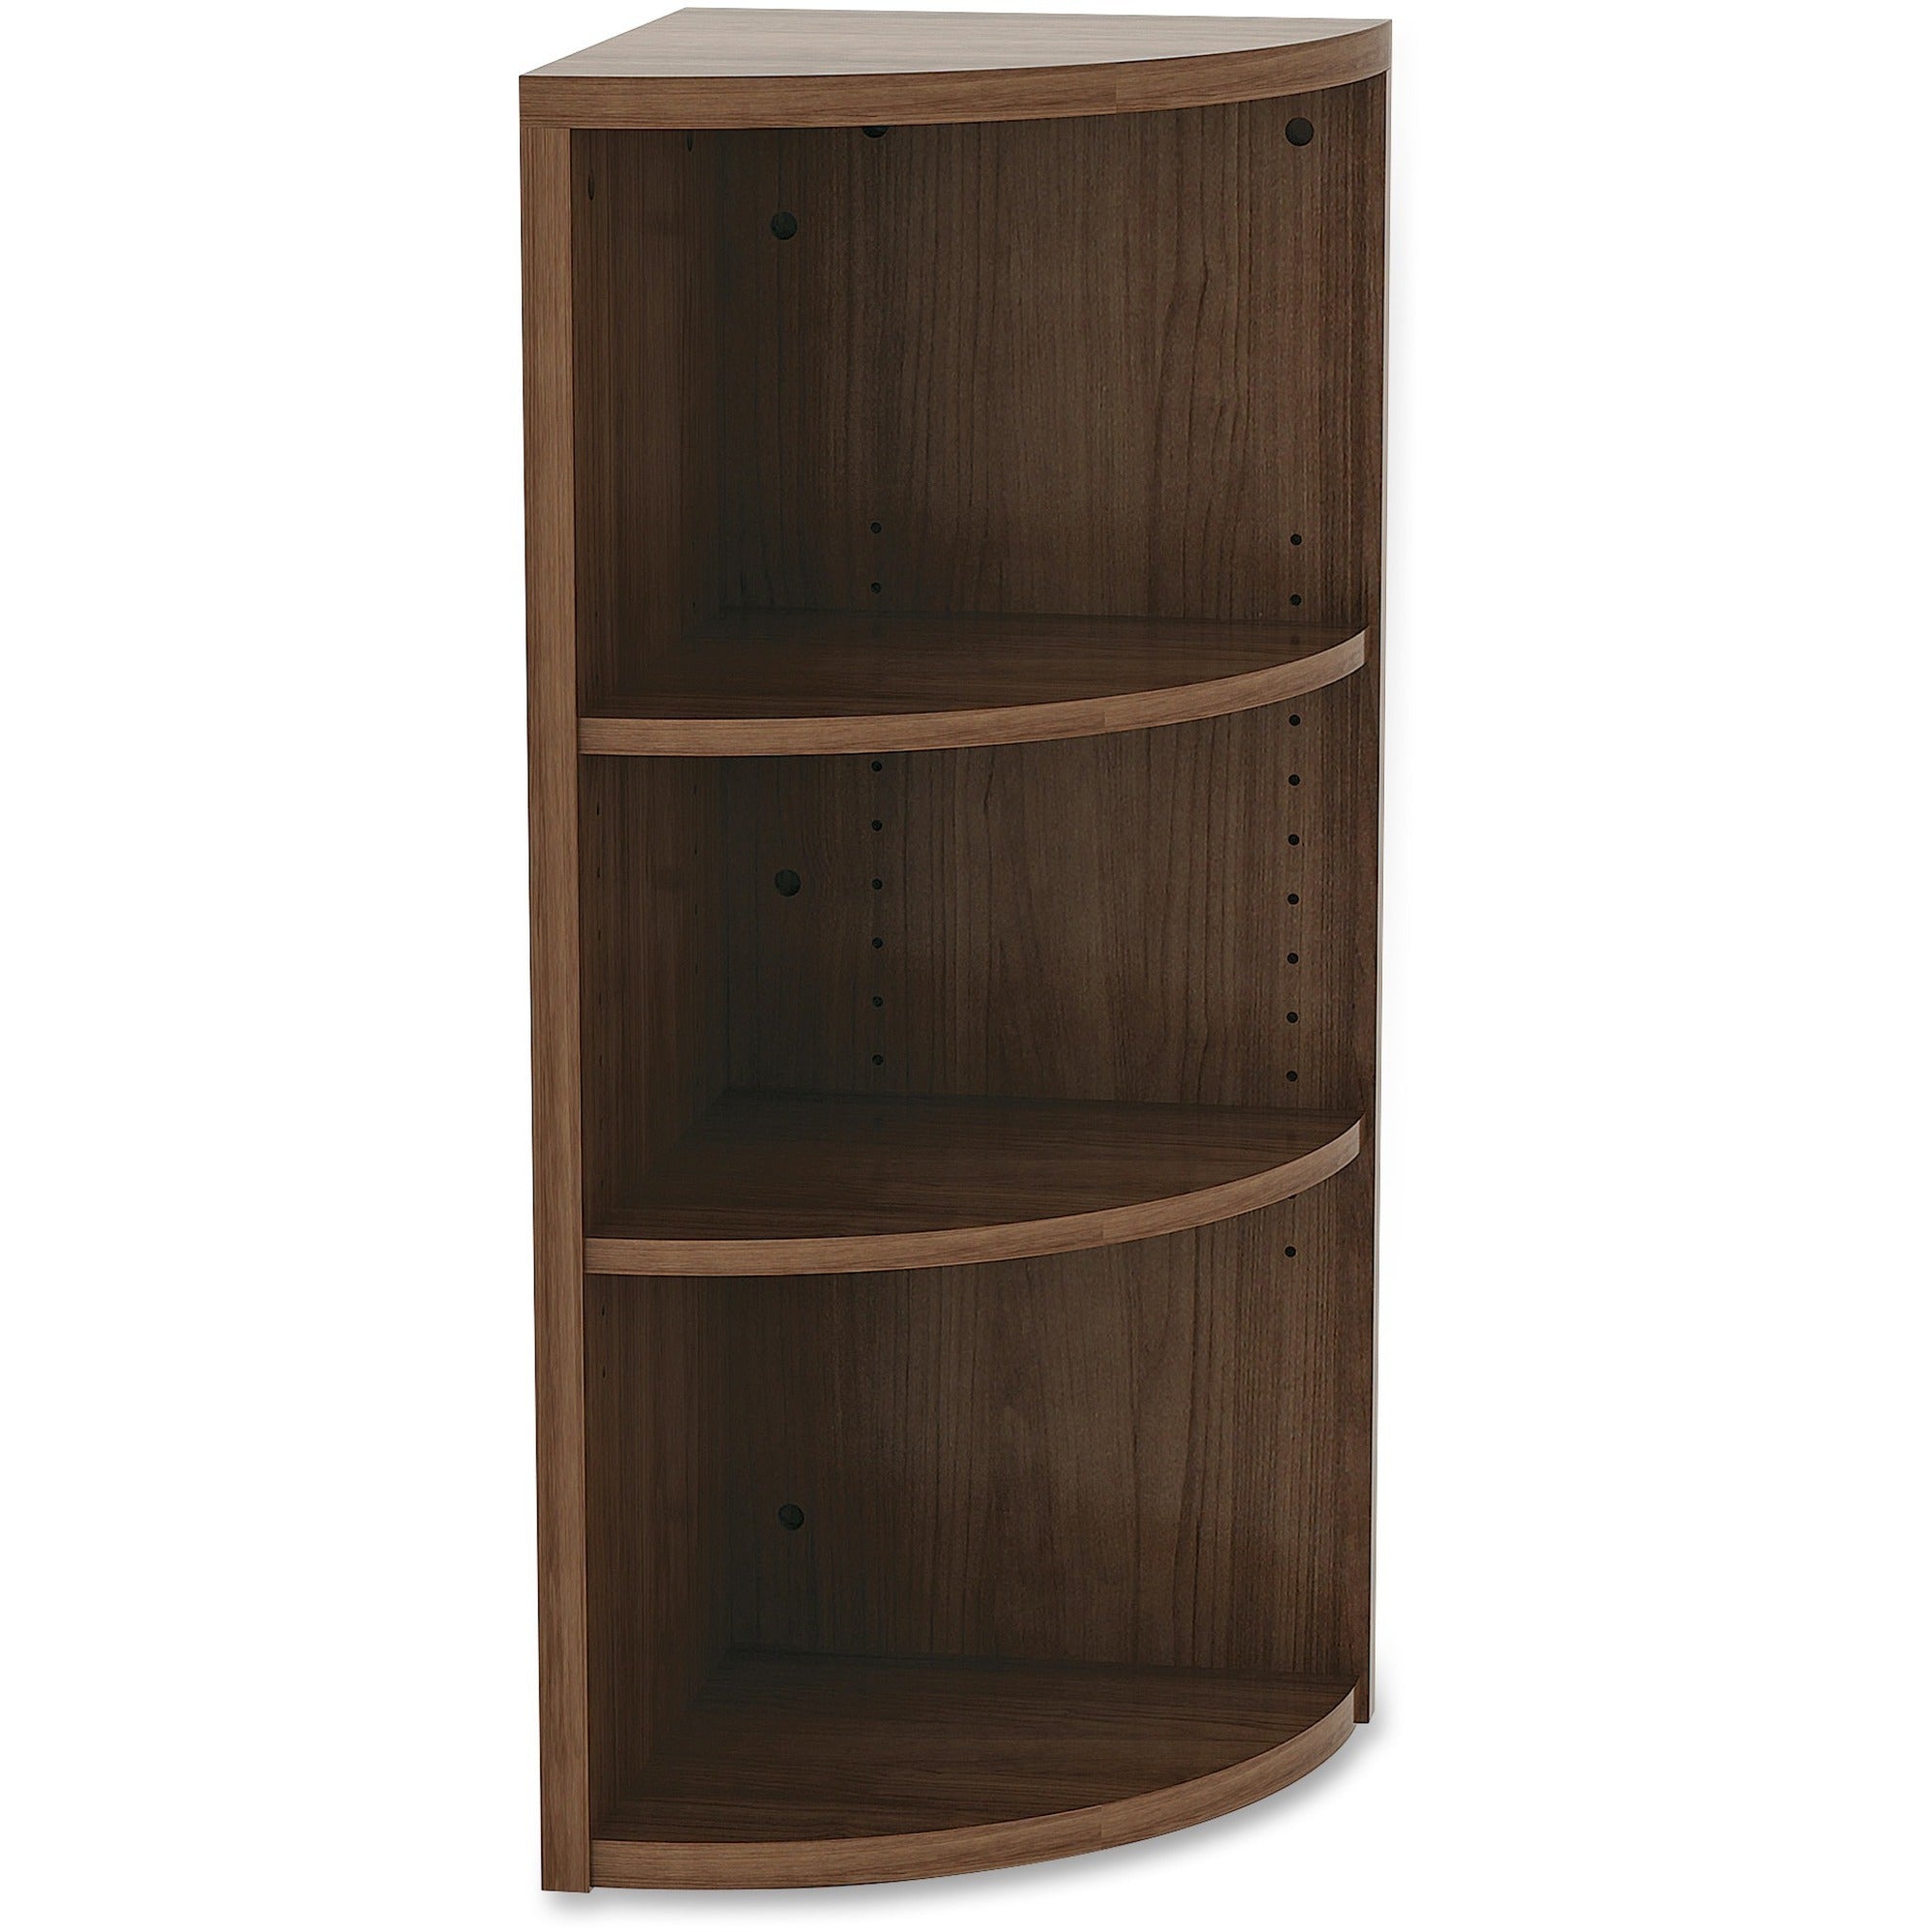 Lorell Essentials Series Hutch End Corner Bookcase - 36" Height x 14.8" Width37.8" Length%Floor - Walnut - Laminate, Polyvinyl Chloride (PVC) - 1 Each - 1